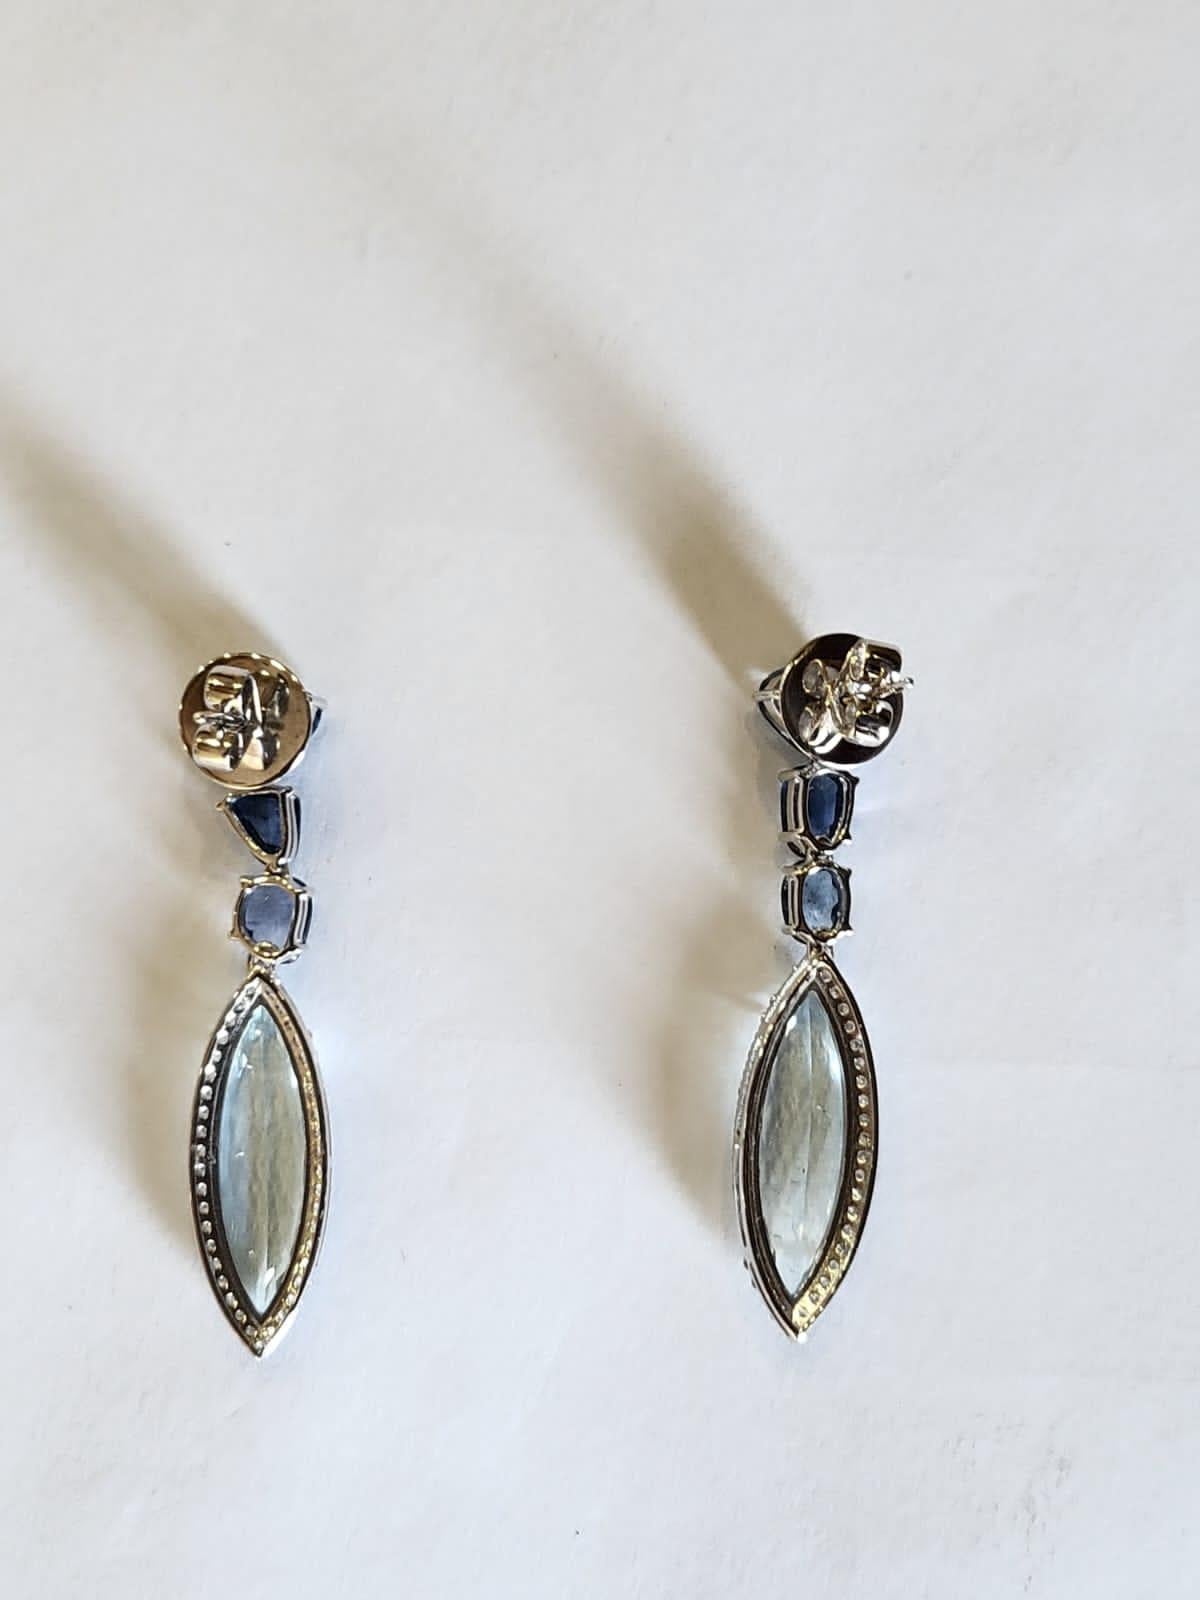 Marquise Cut Set in 18K Gold, natural Aquamarine, Blue Sapphires & Diamonds Dangle Earrings